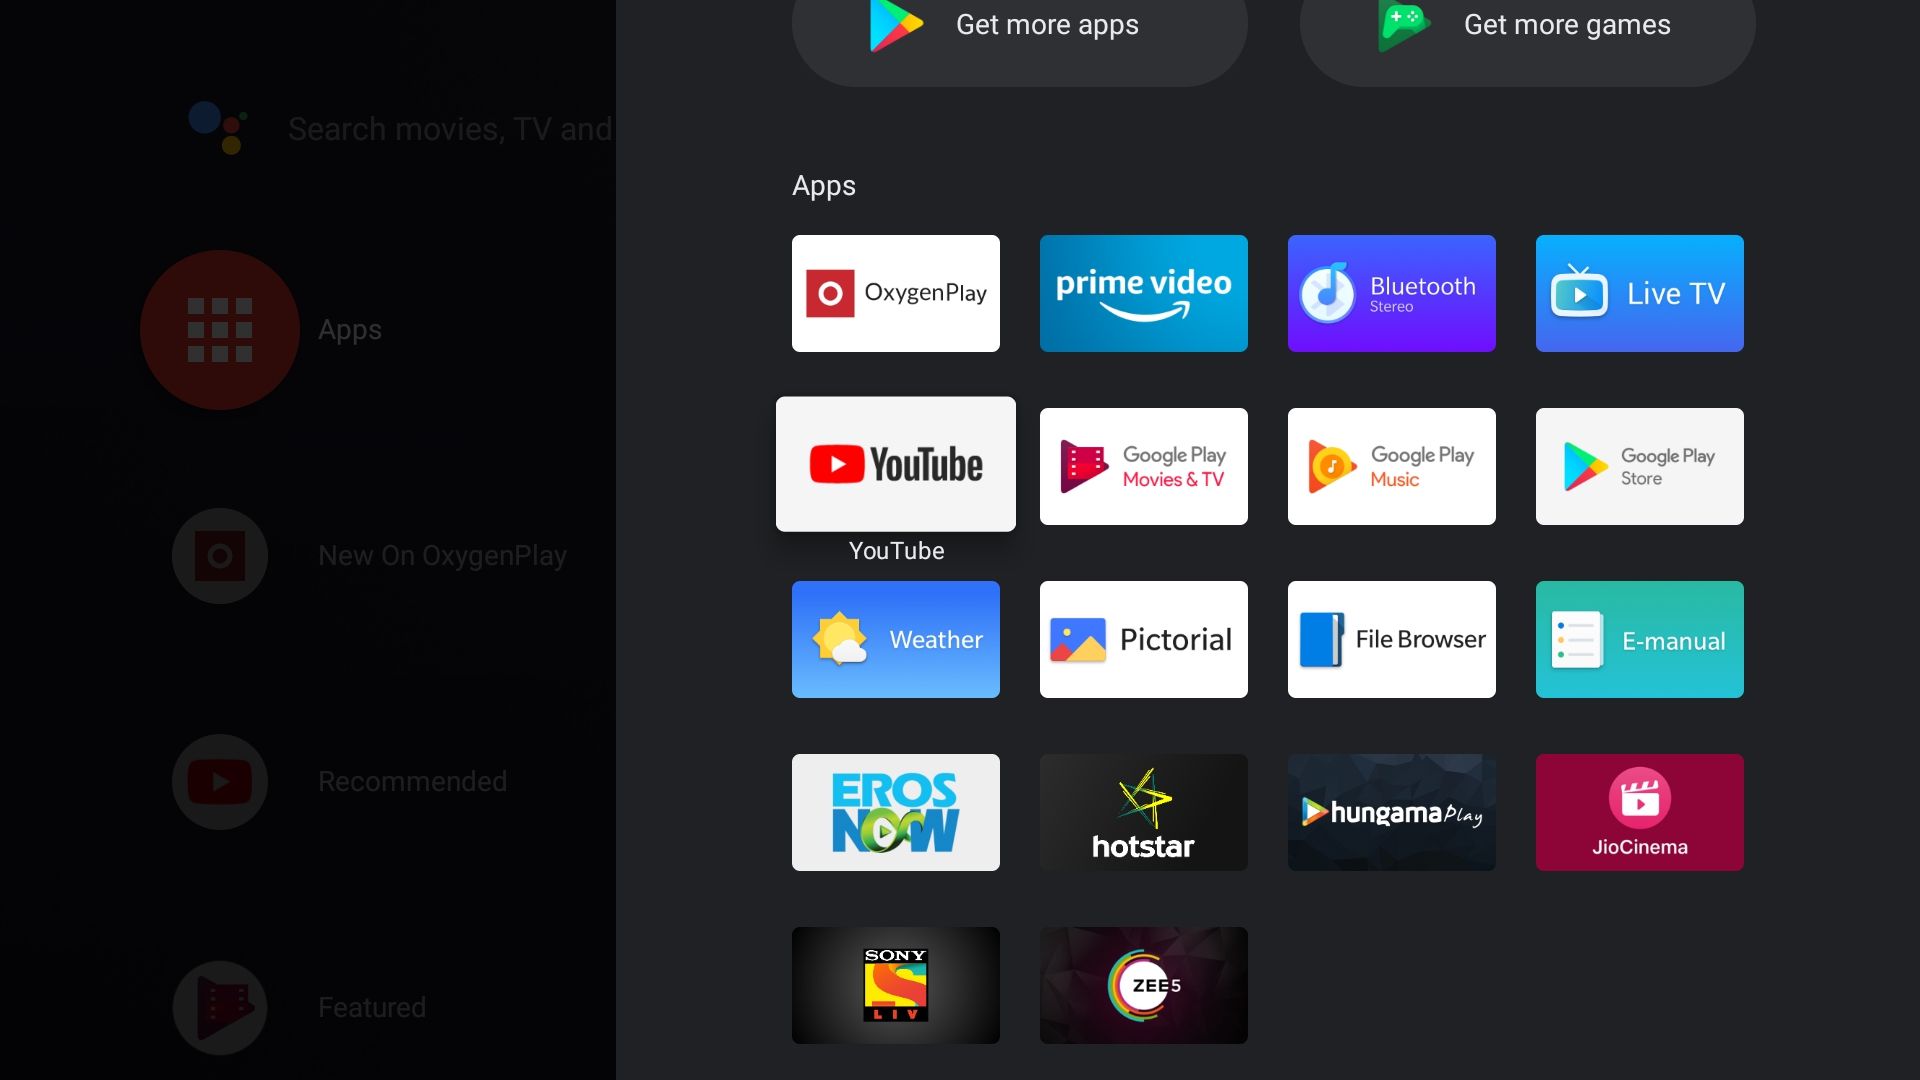 OnePlus TV preloaded apps